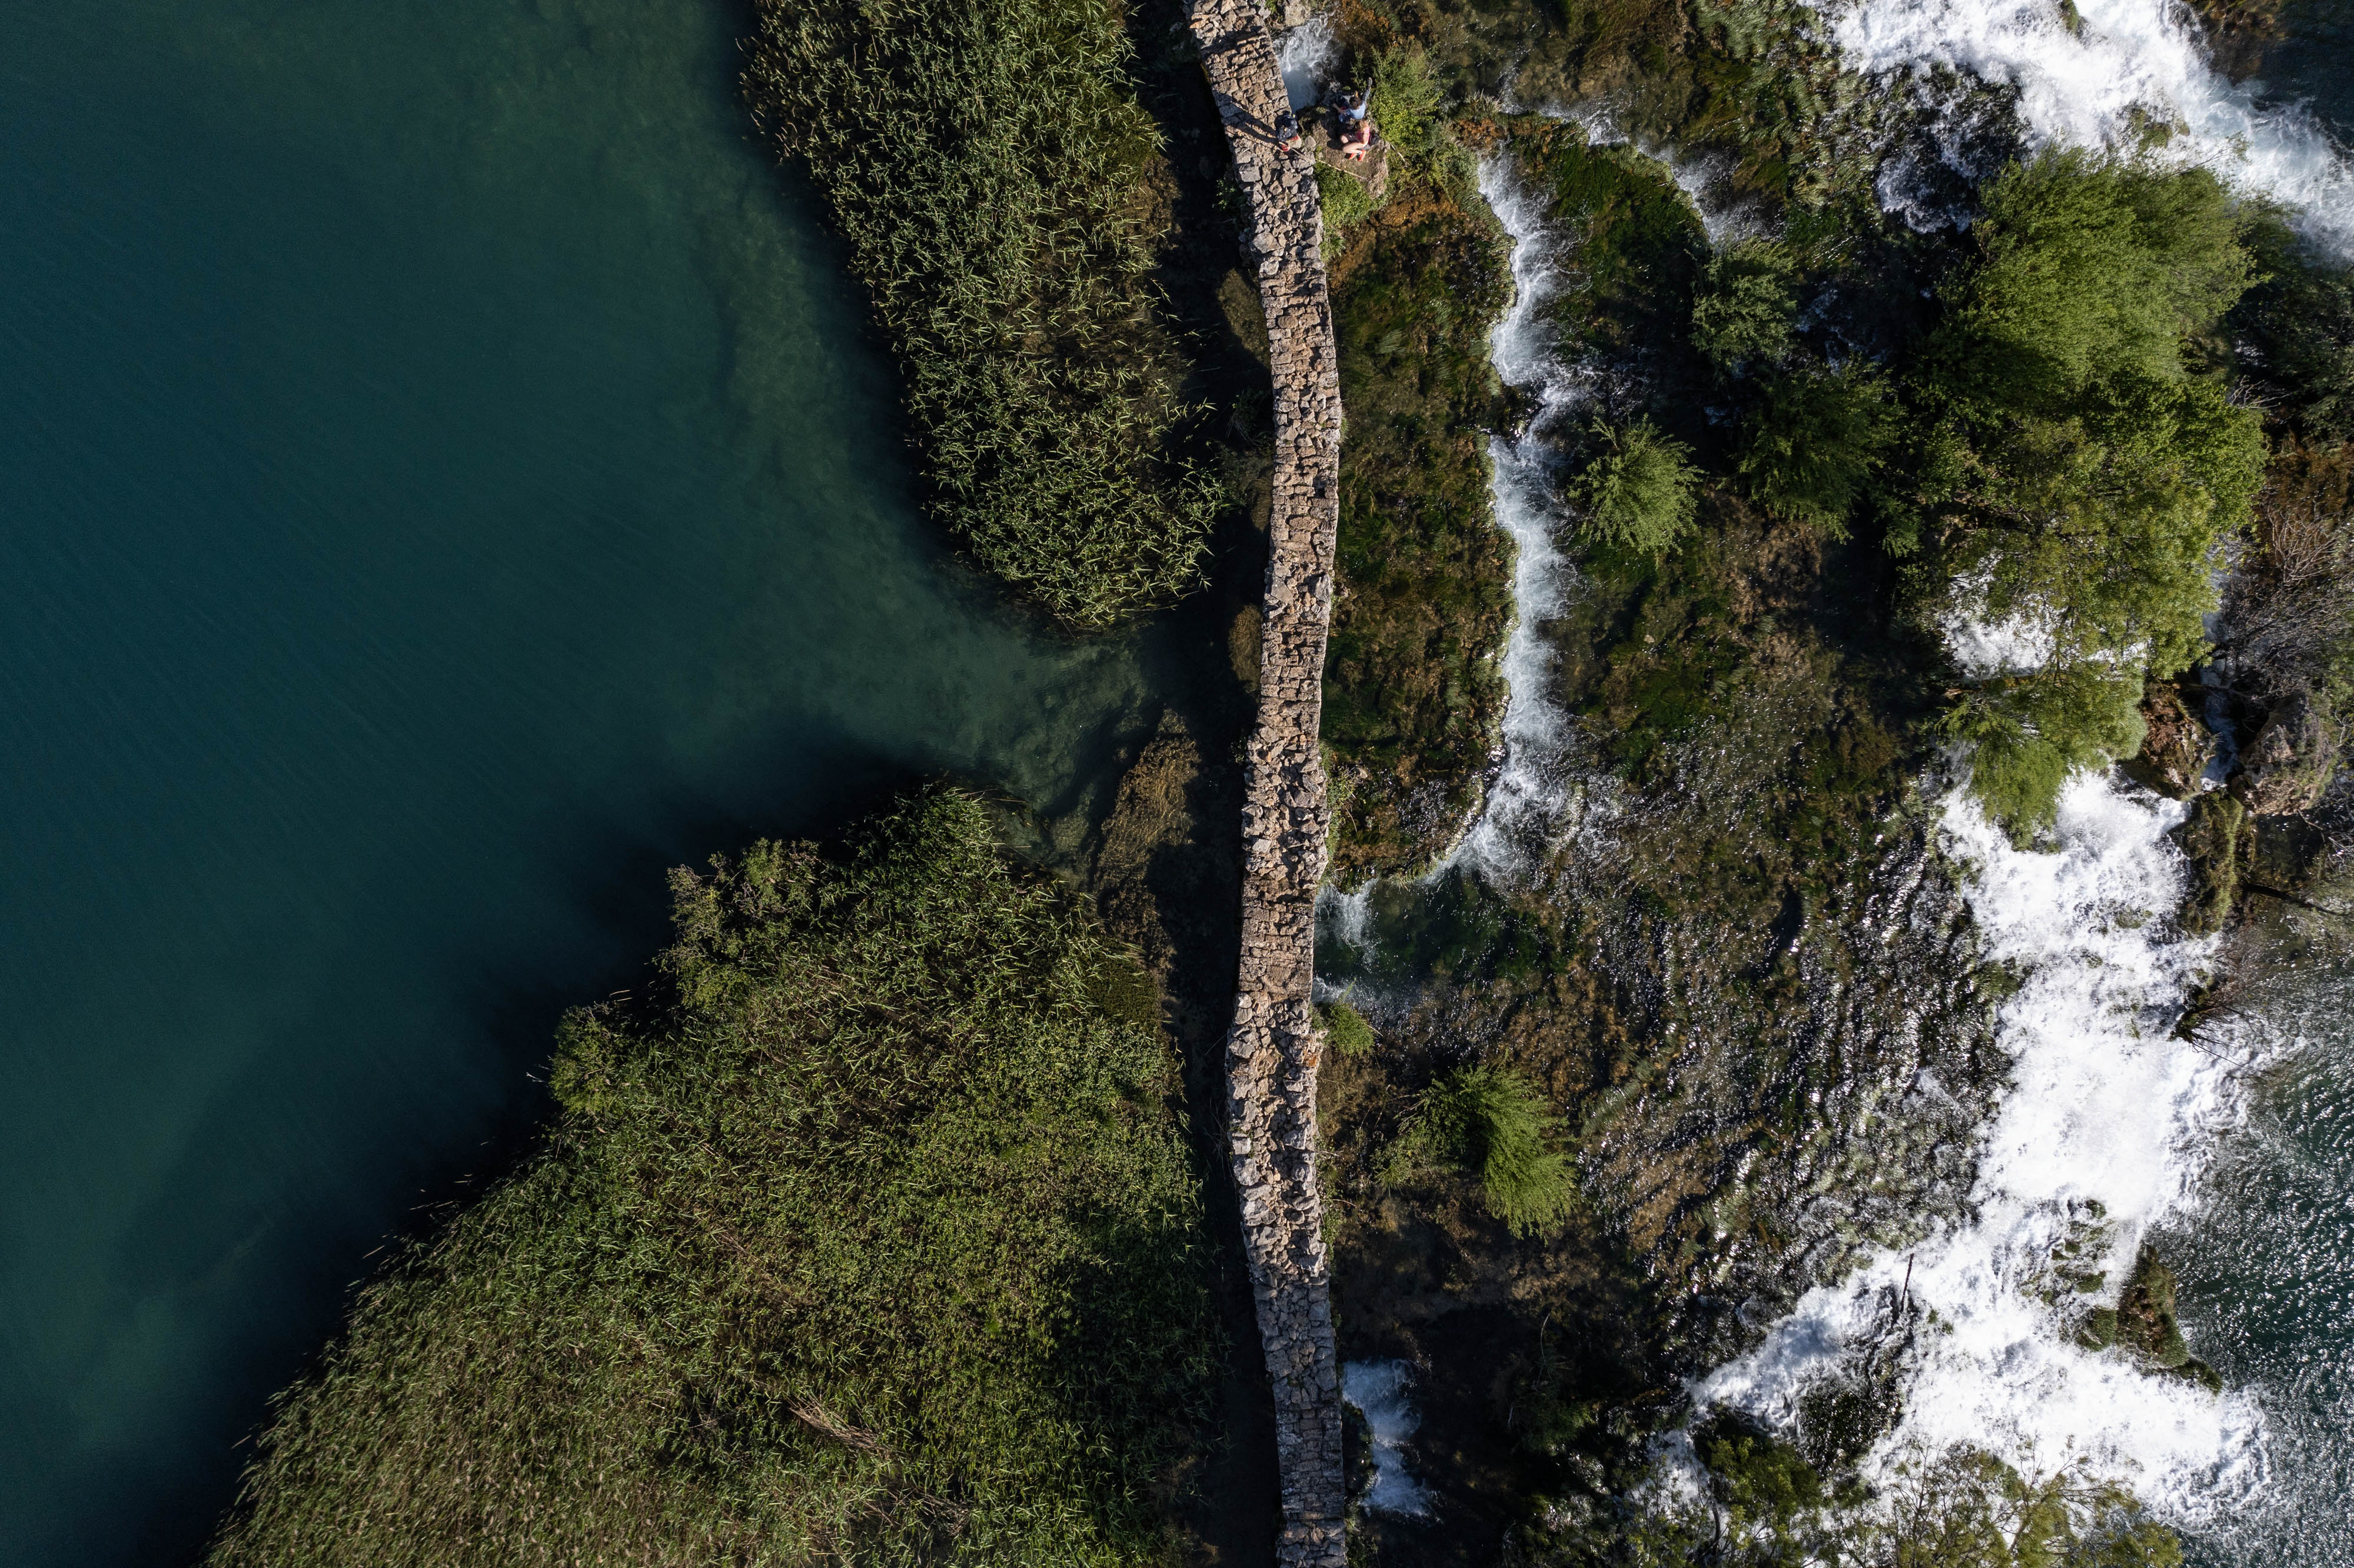 An aerial photo shows a stone bridge over a river.